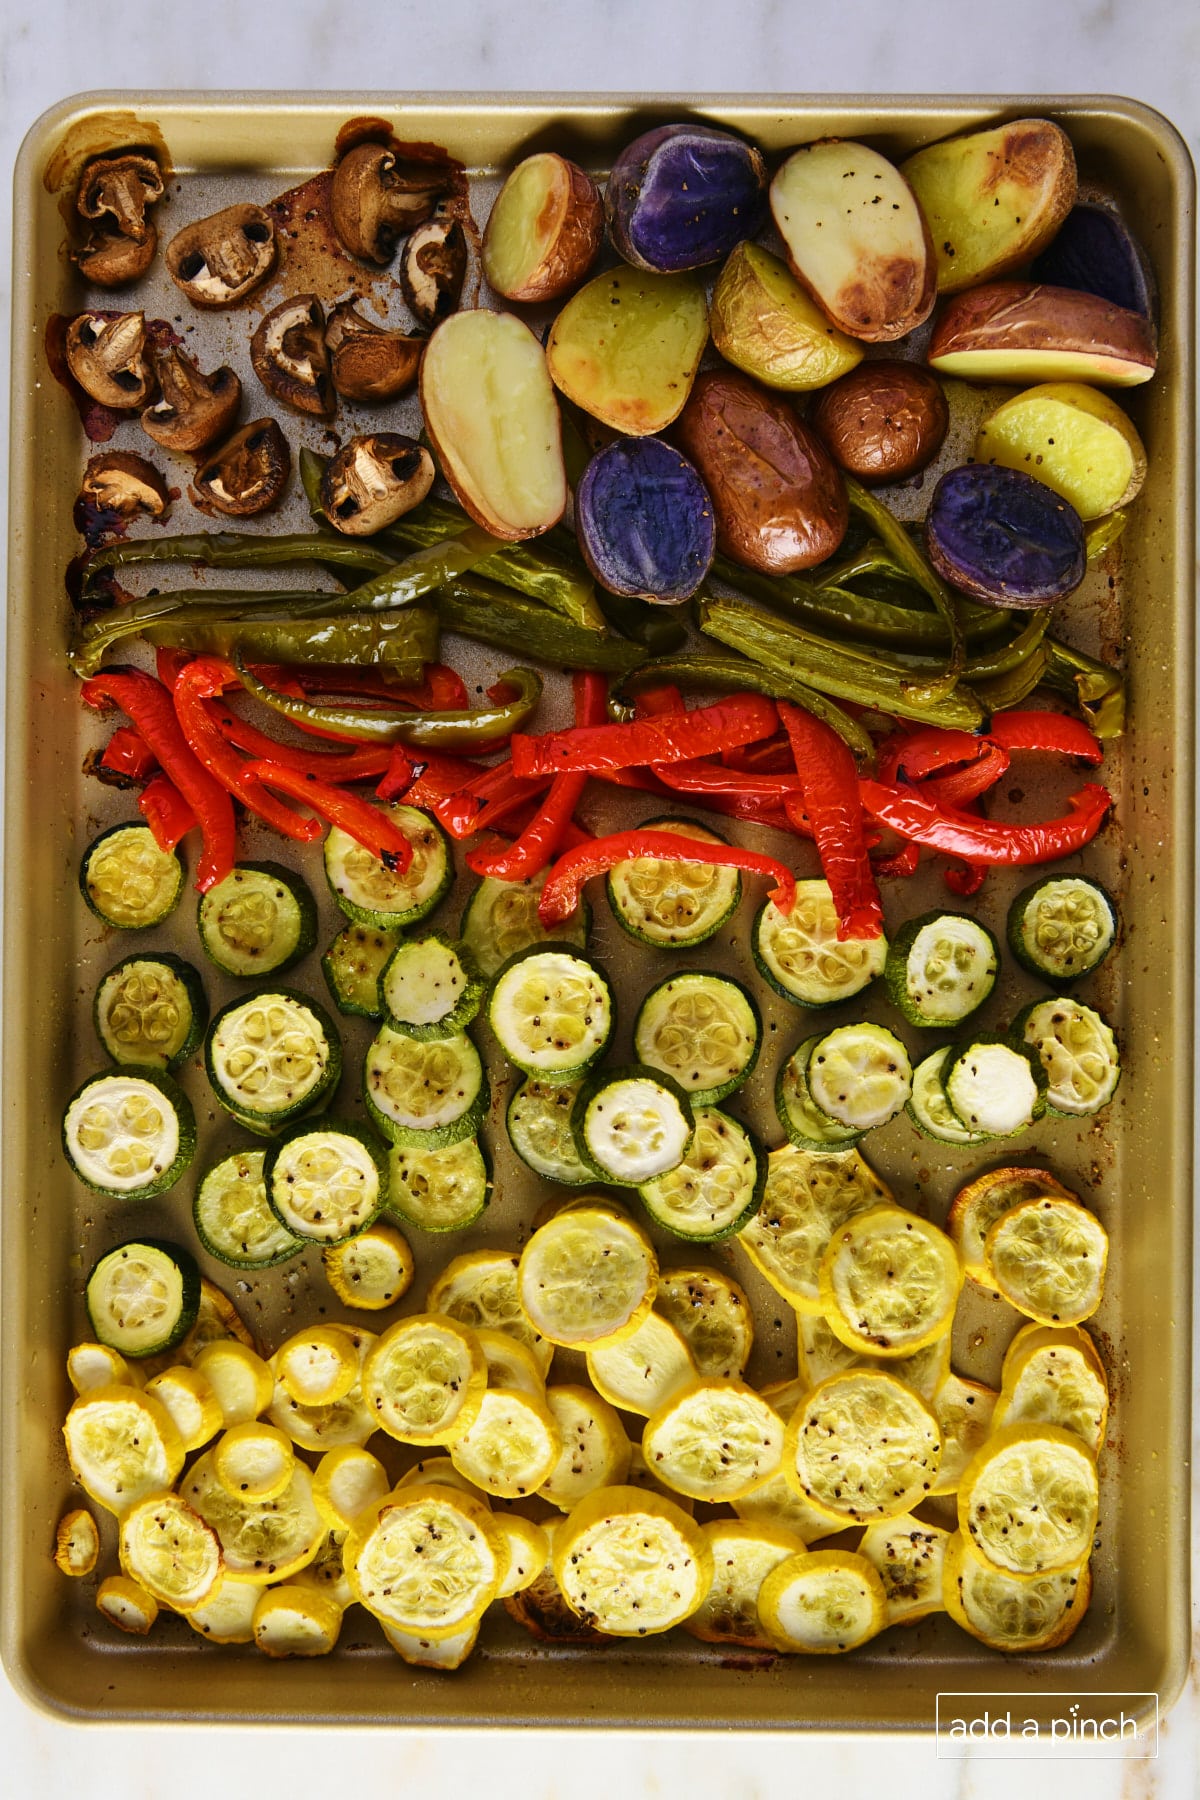 Roasted vegetables on a baking sheet.